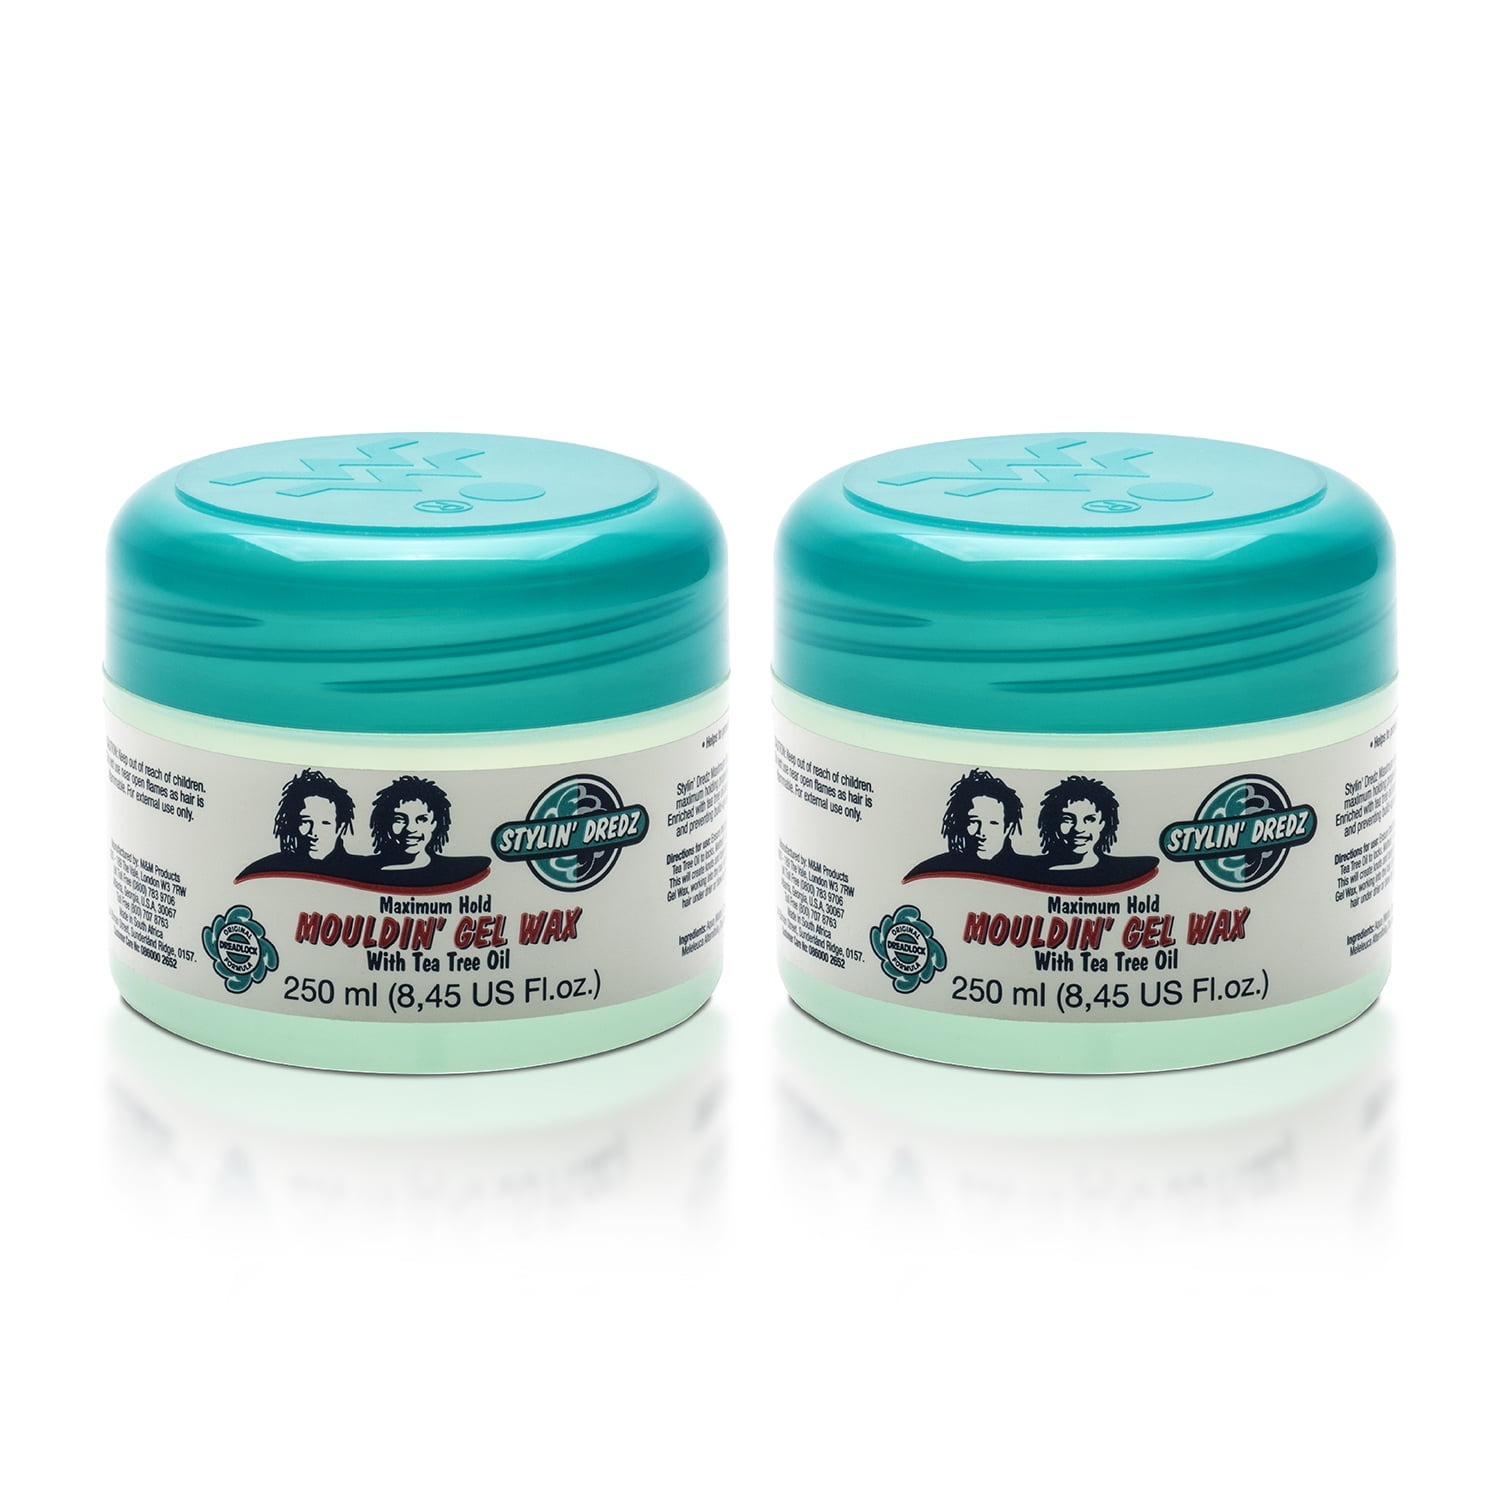 Stylin' Dredz Moulding Gel Wax with Tea Tree Oil Hair Care 250 ml